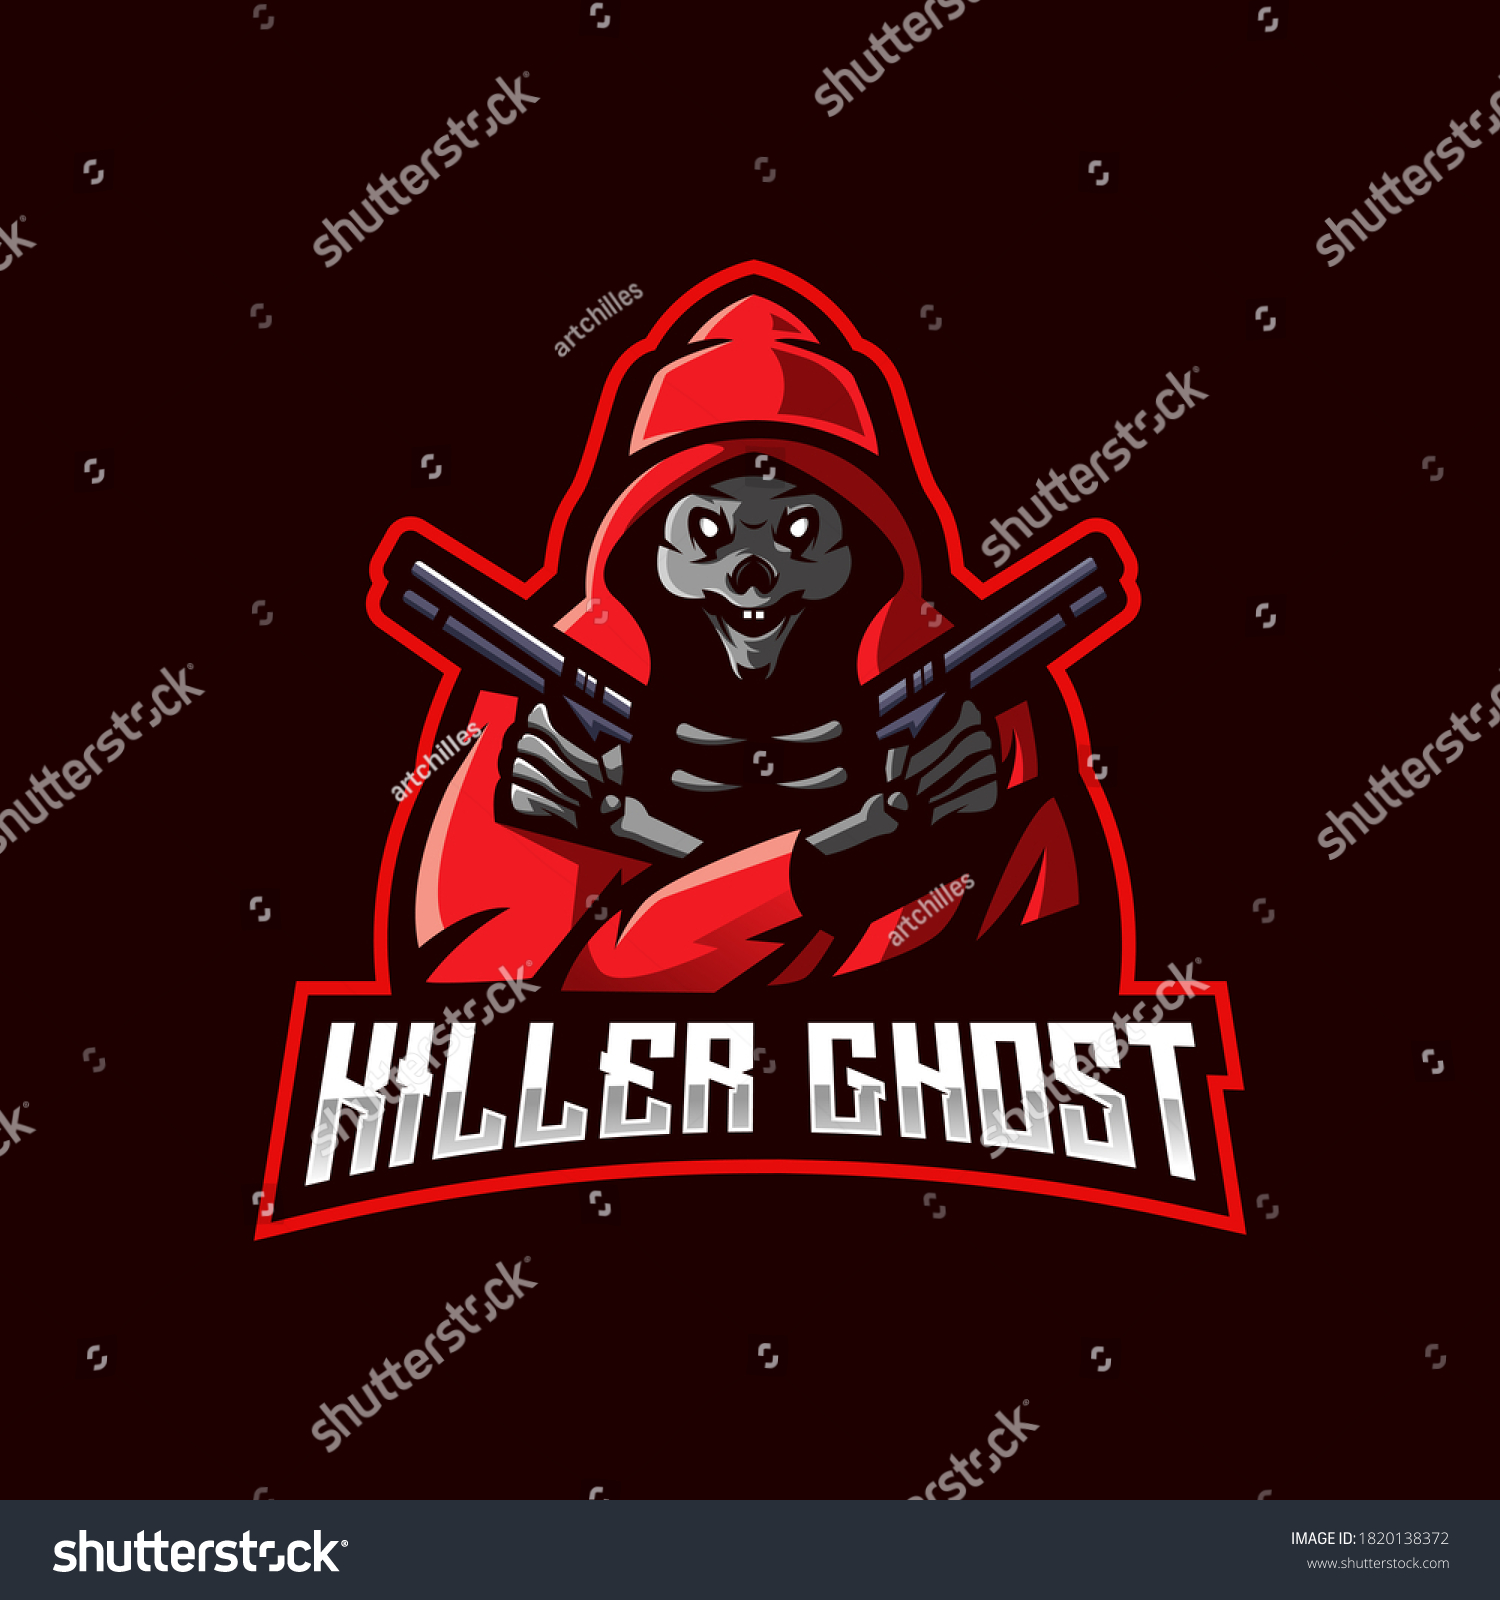 Killer Ghost e-Sport Mascot Logo Design - Royalty Free Stock Vector ...